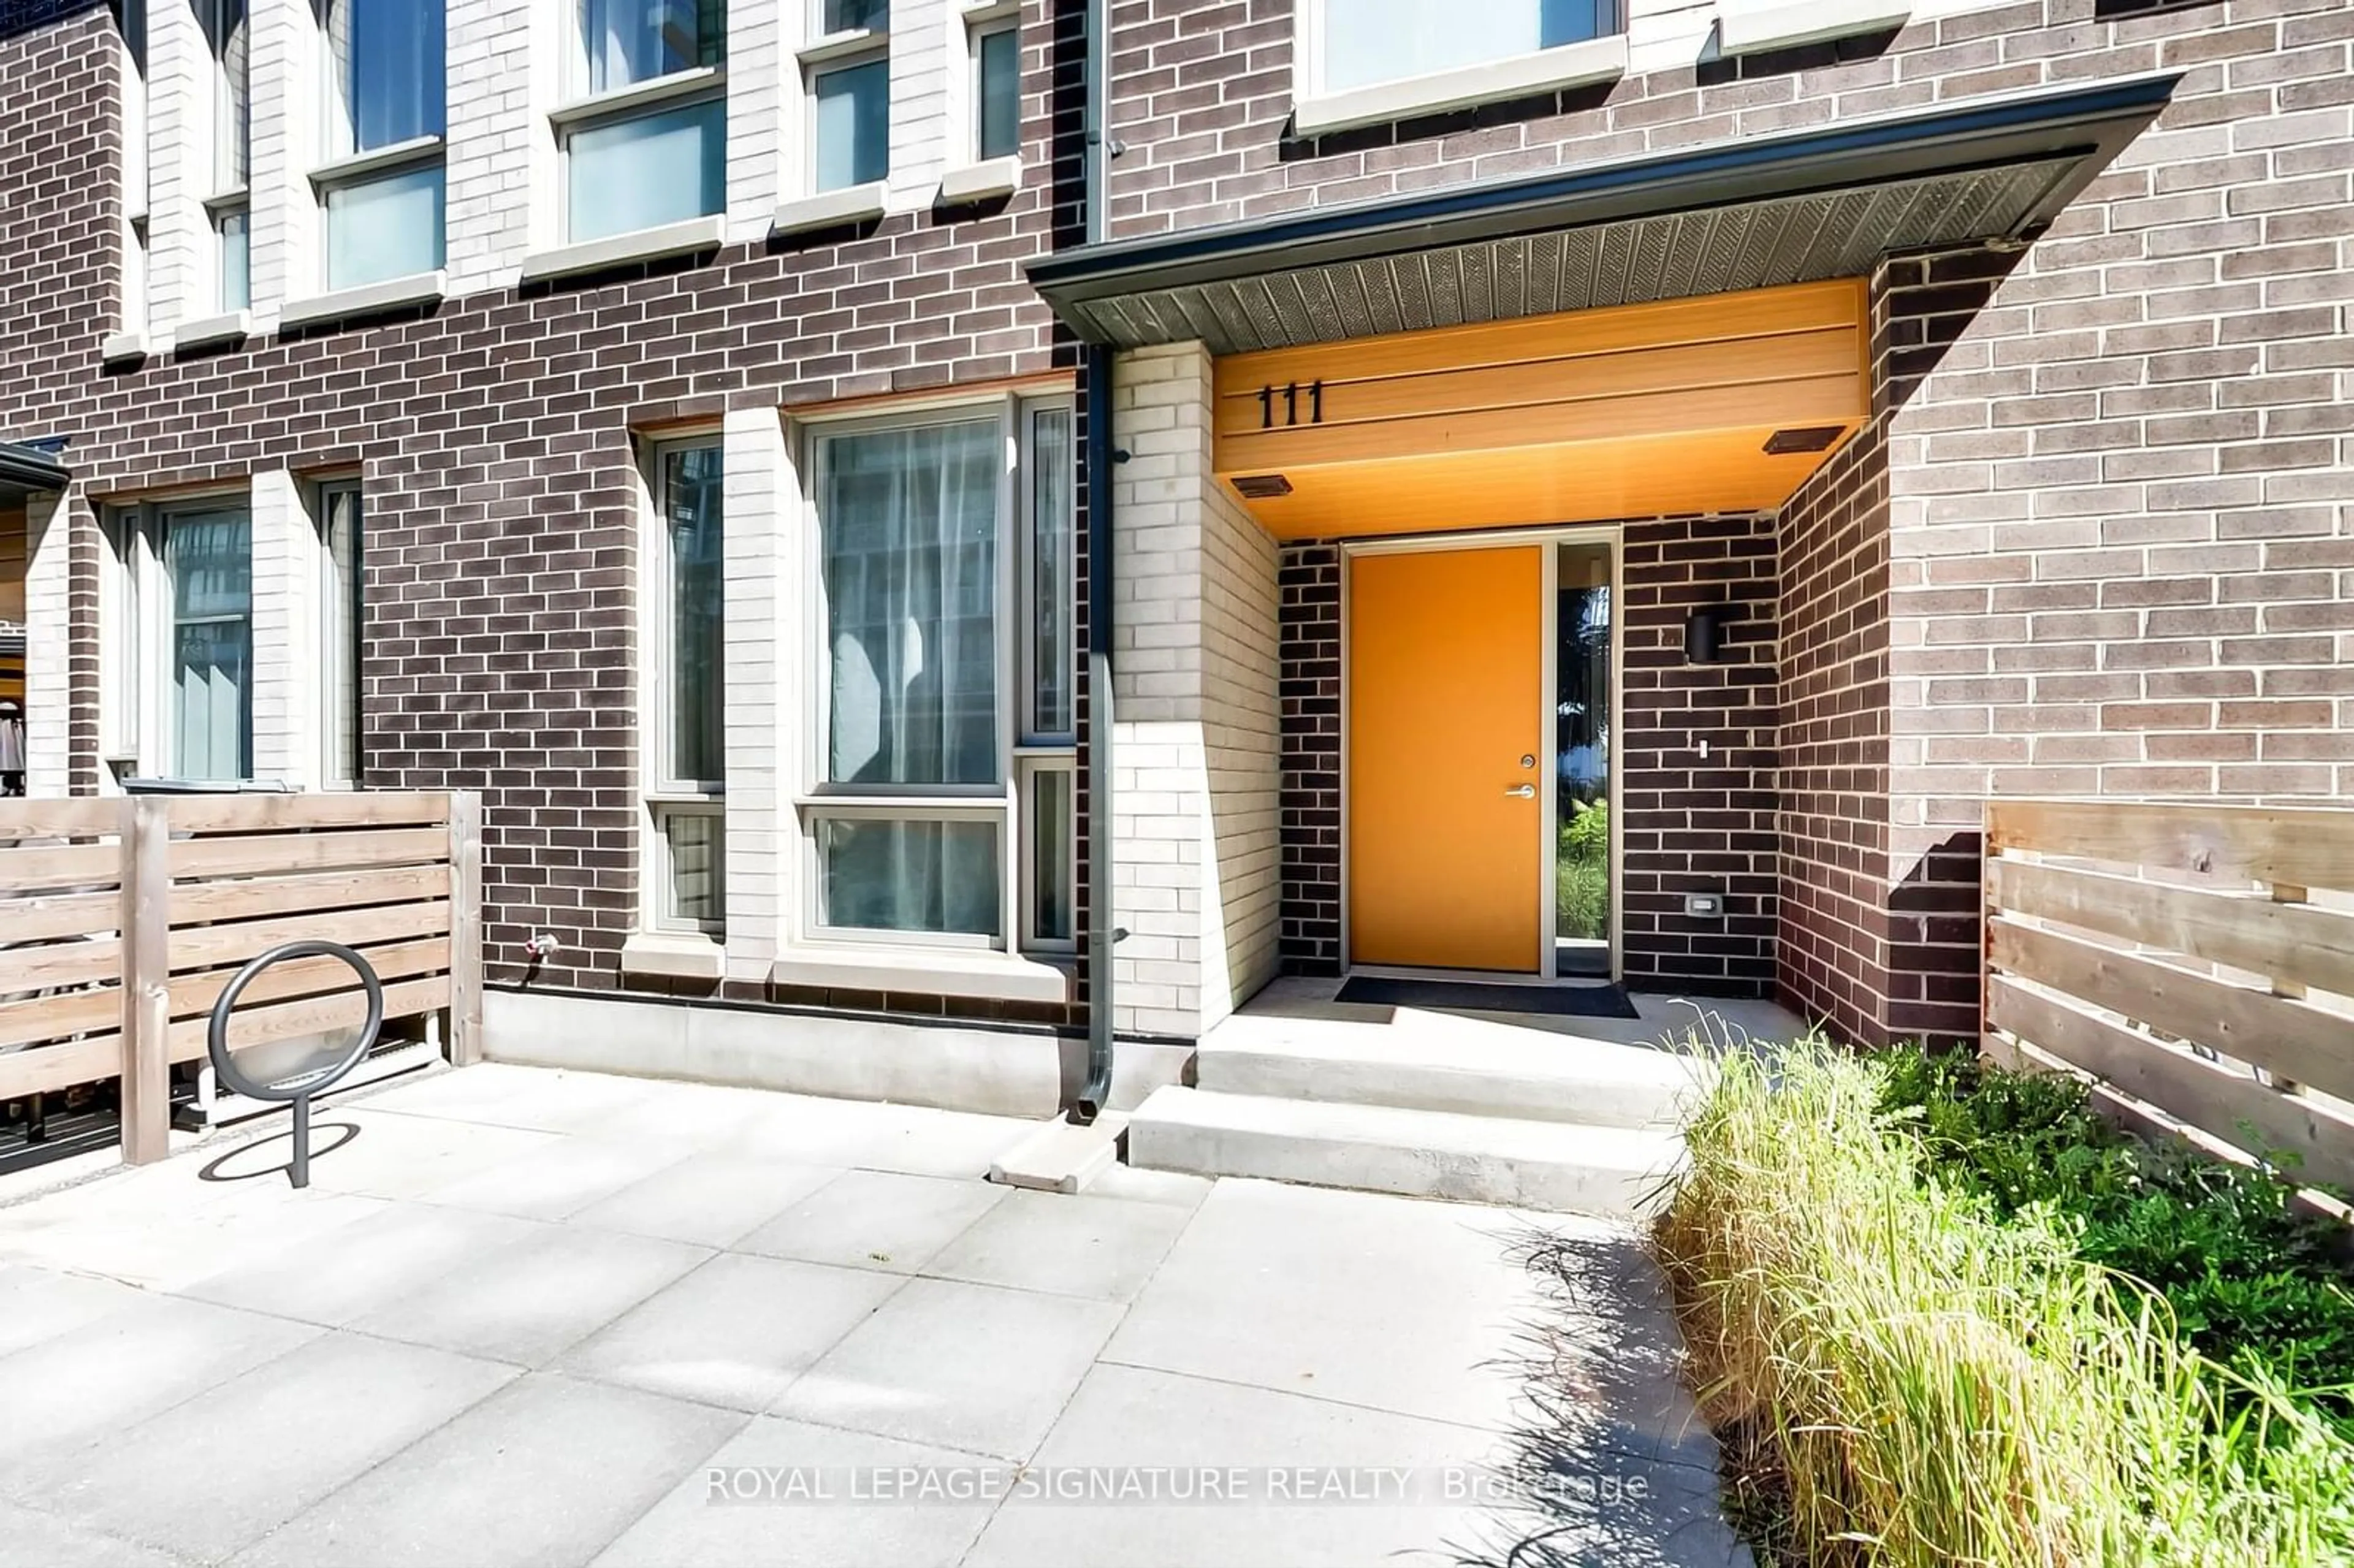 Home with brick exterior material for 19 Allenbury Gdns #TH 111, Toronto Ontario M2J 2Z2